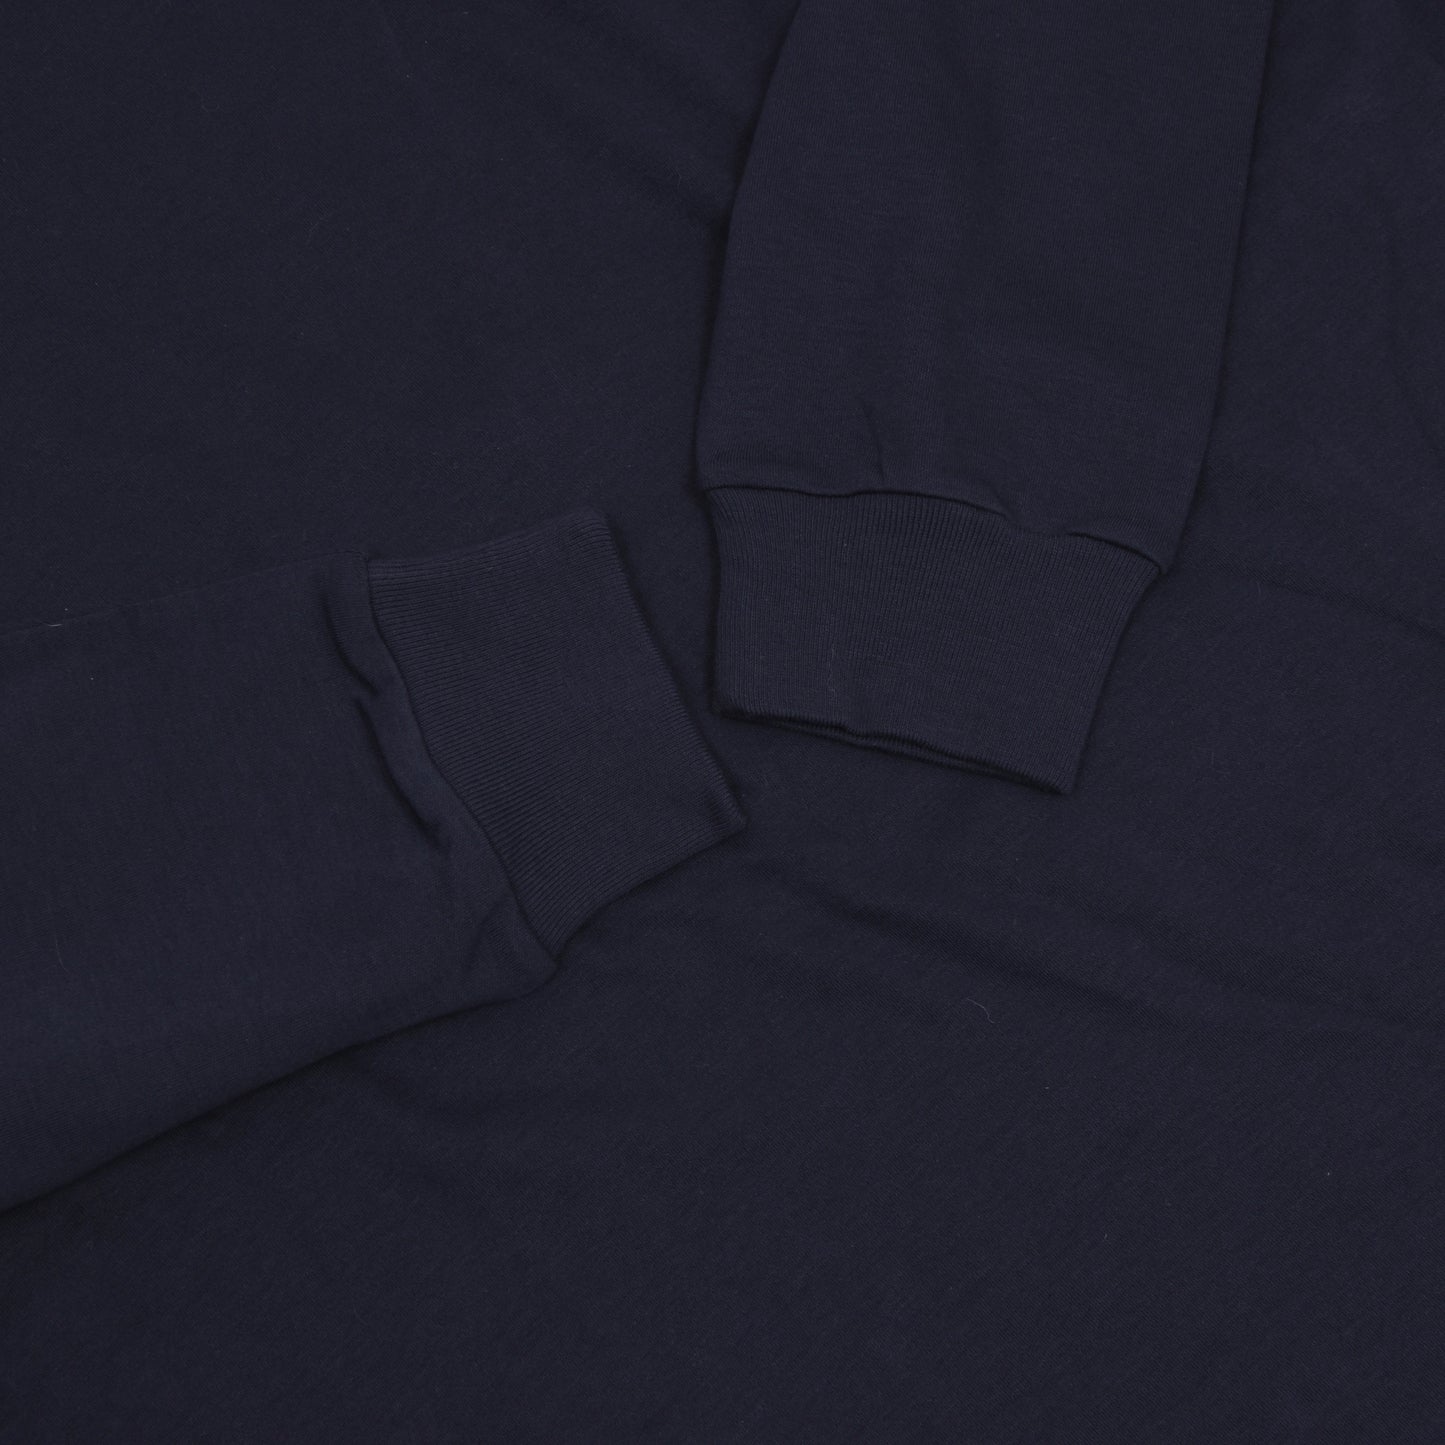 Polo Ralph Lauren Cotton Turtleneck Sweater Size XL - Navy Blue